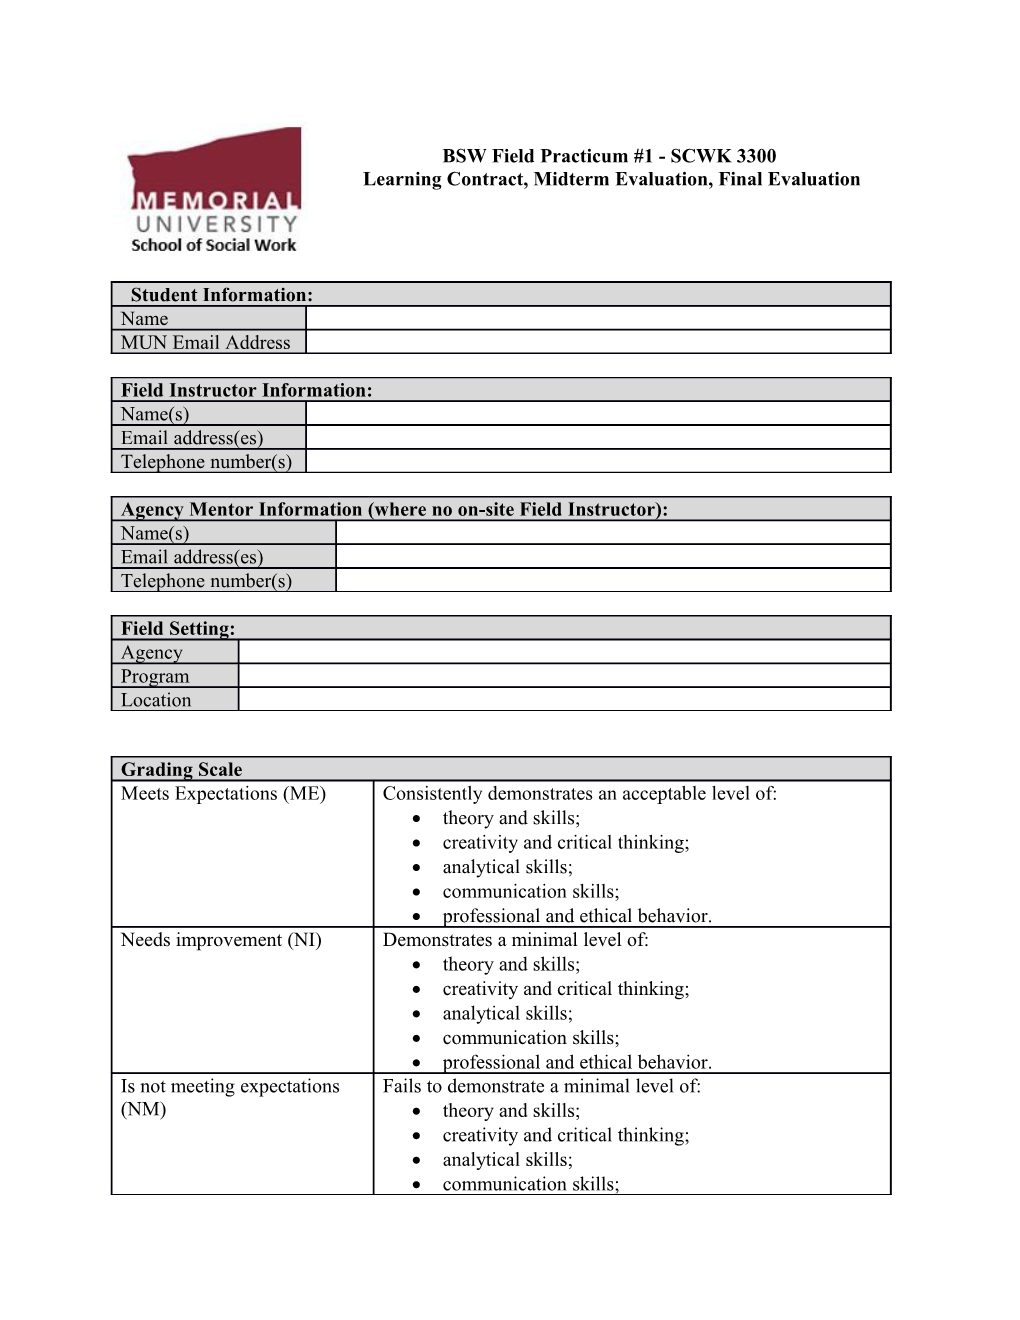 BSW Field Practicum #1 SCWK 3300 Learning Contract & Evaluations Appendix G